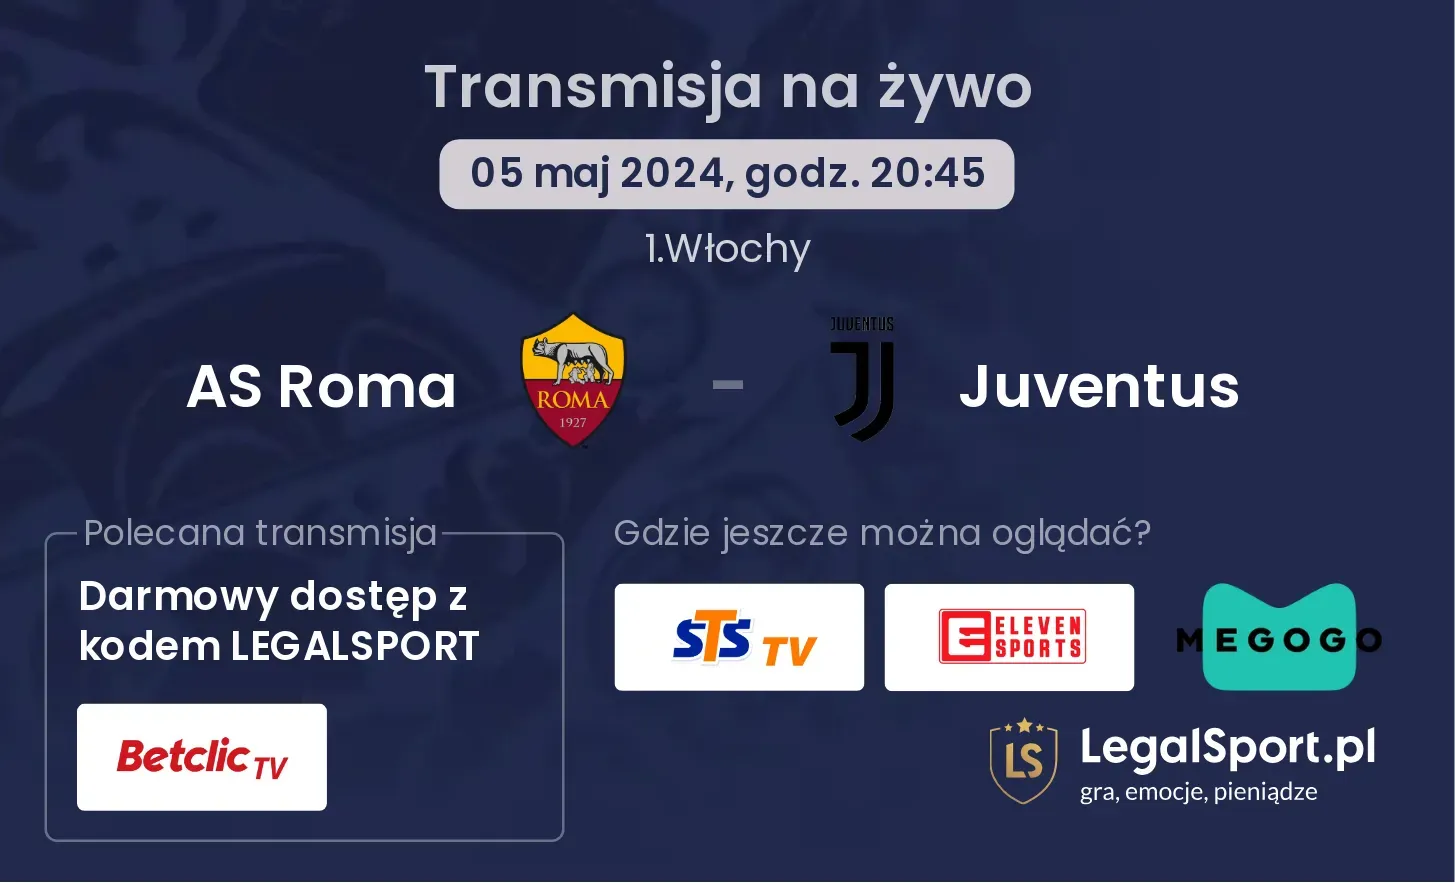 AS Roma - Juventus transmisja na żywo